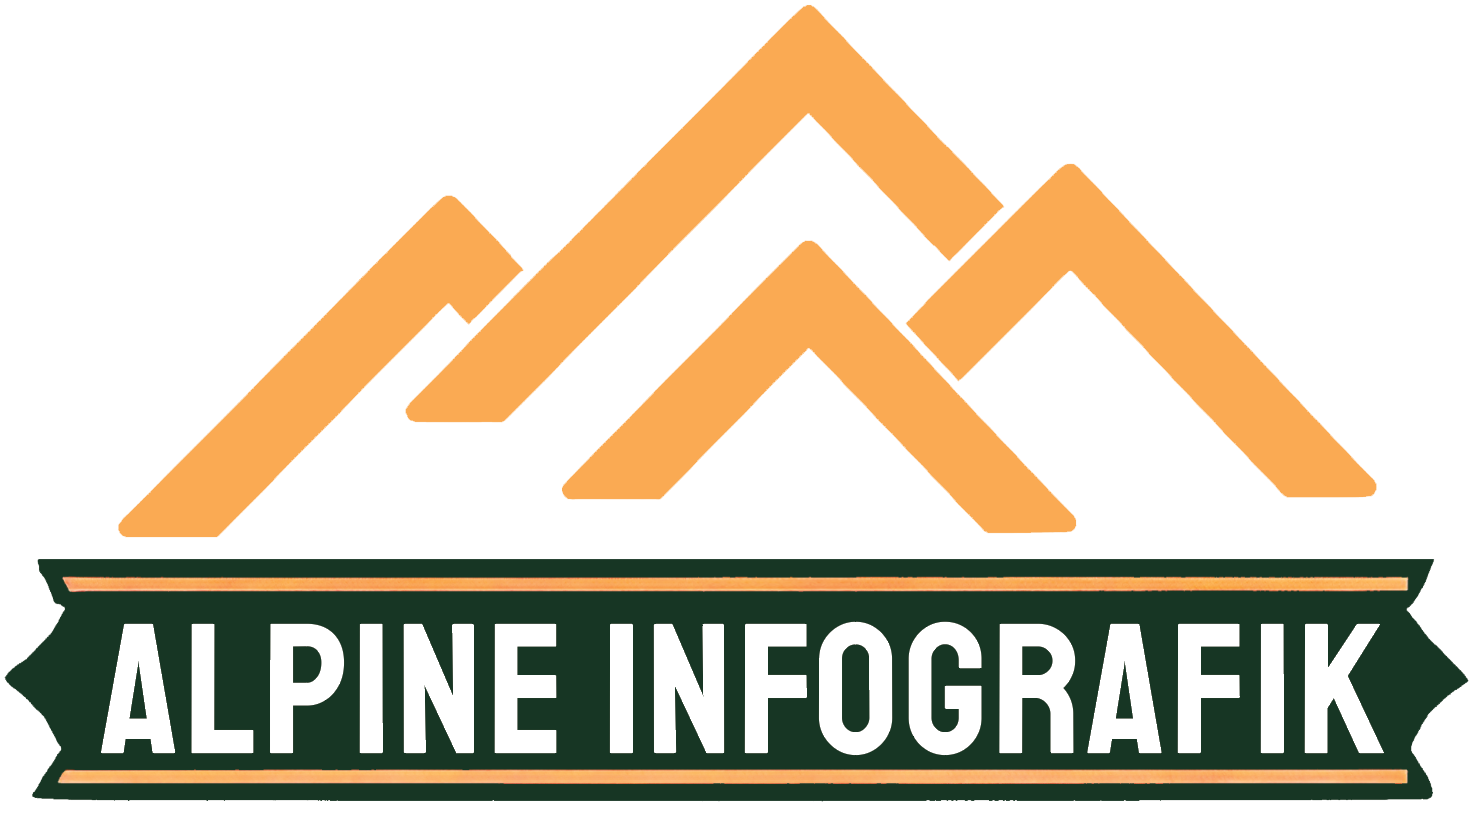 Alpine InfoGrafik Ski Signs